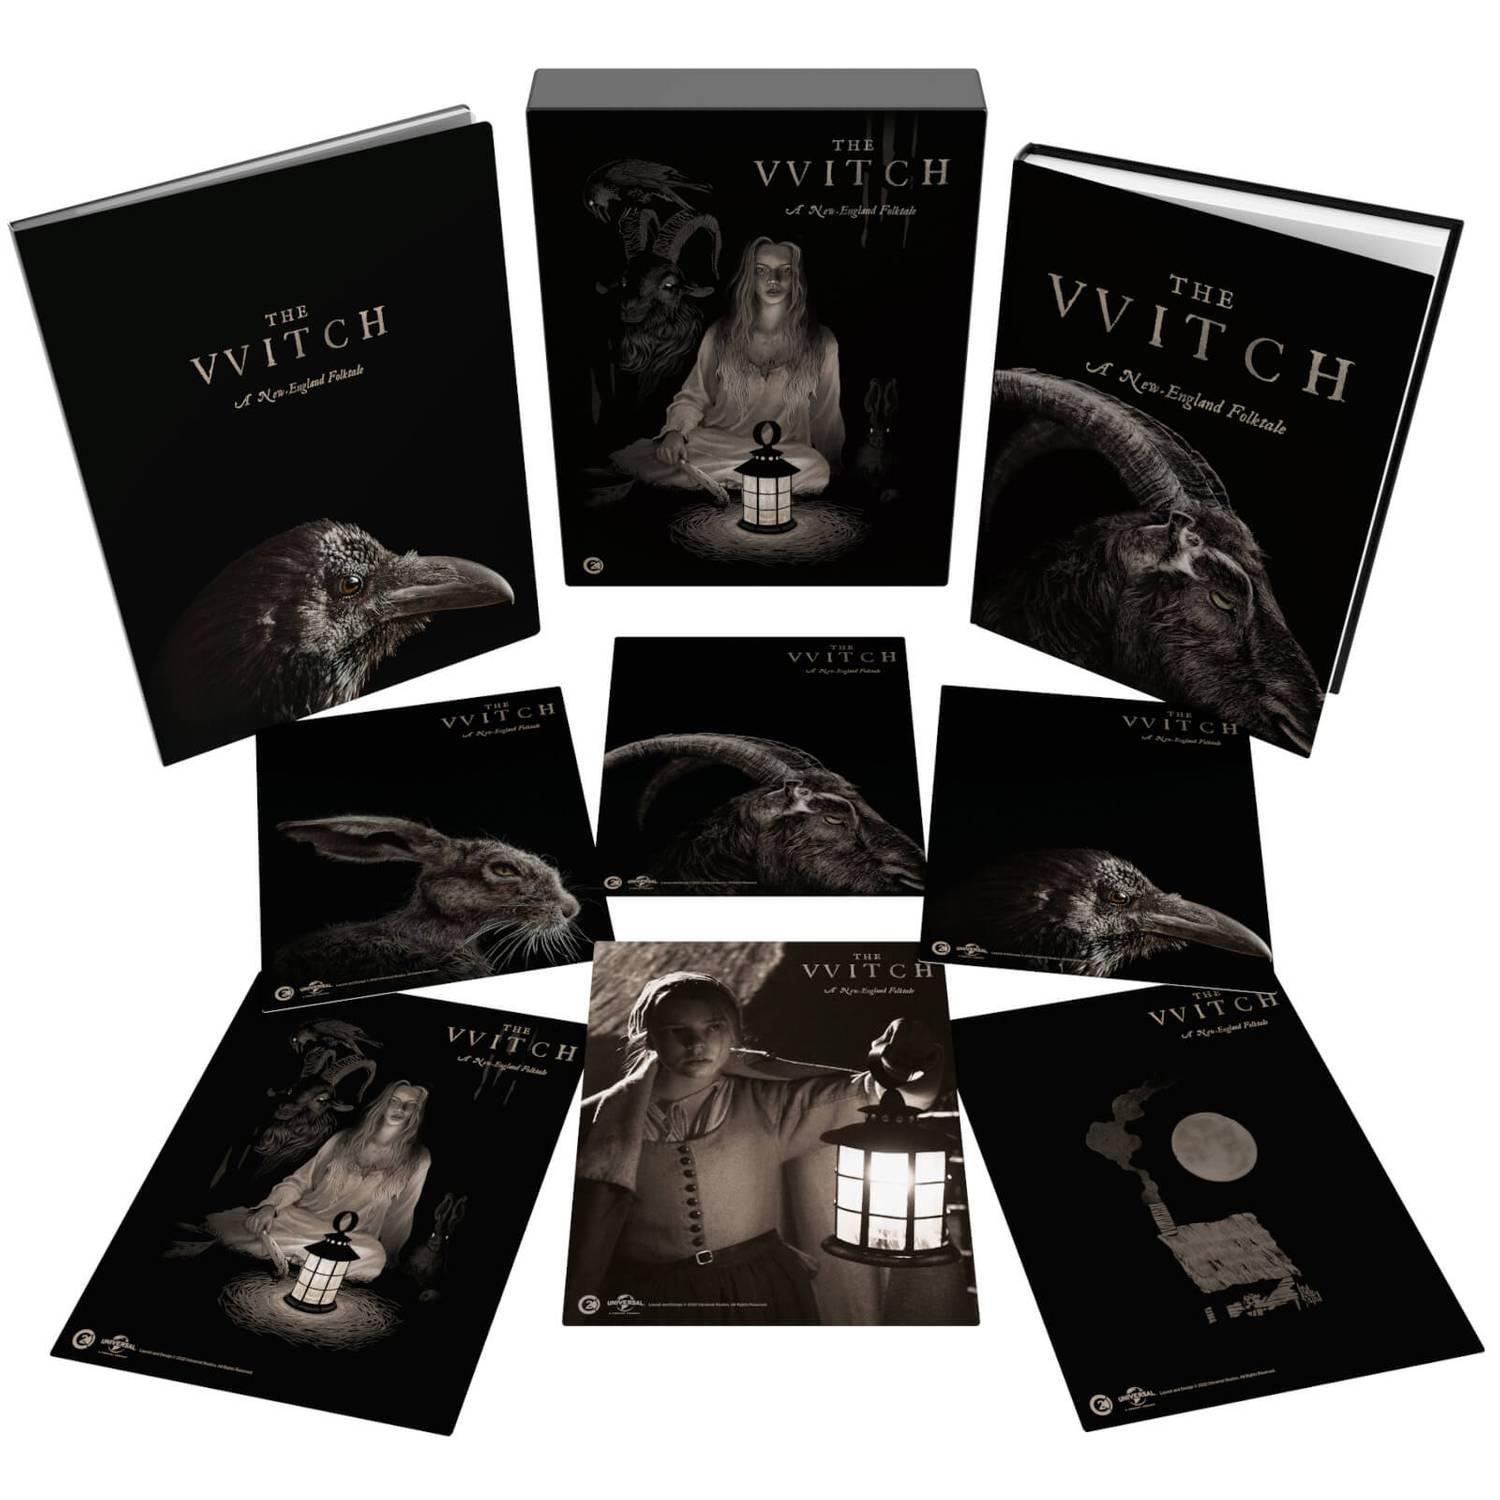 Ведьма (2015) (4K UHD + Blu-ray) Limited Edition